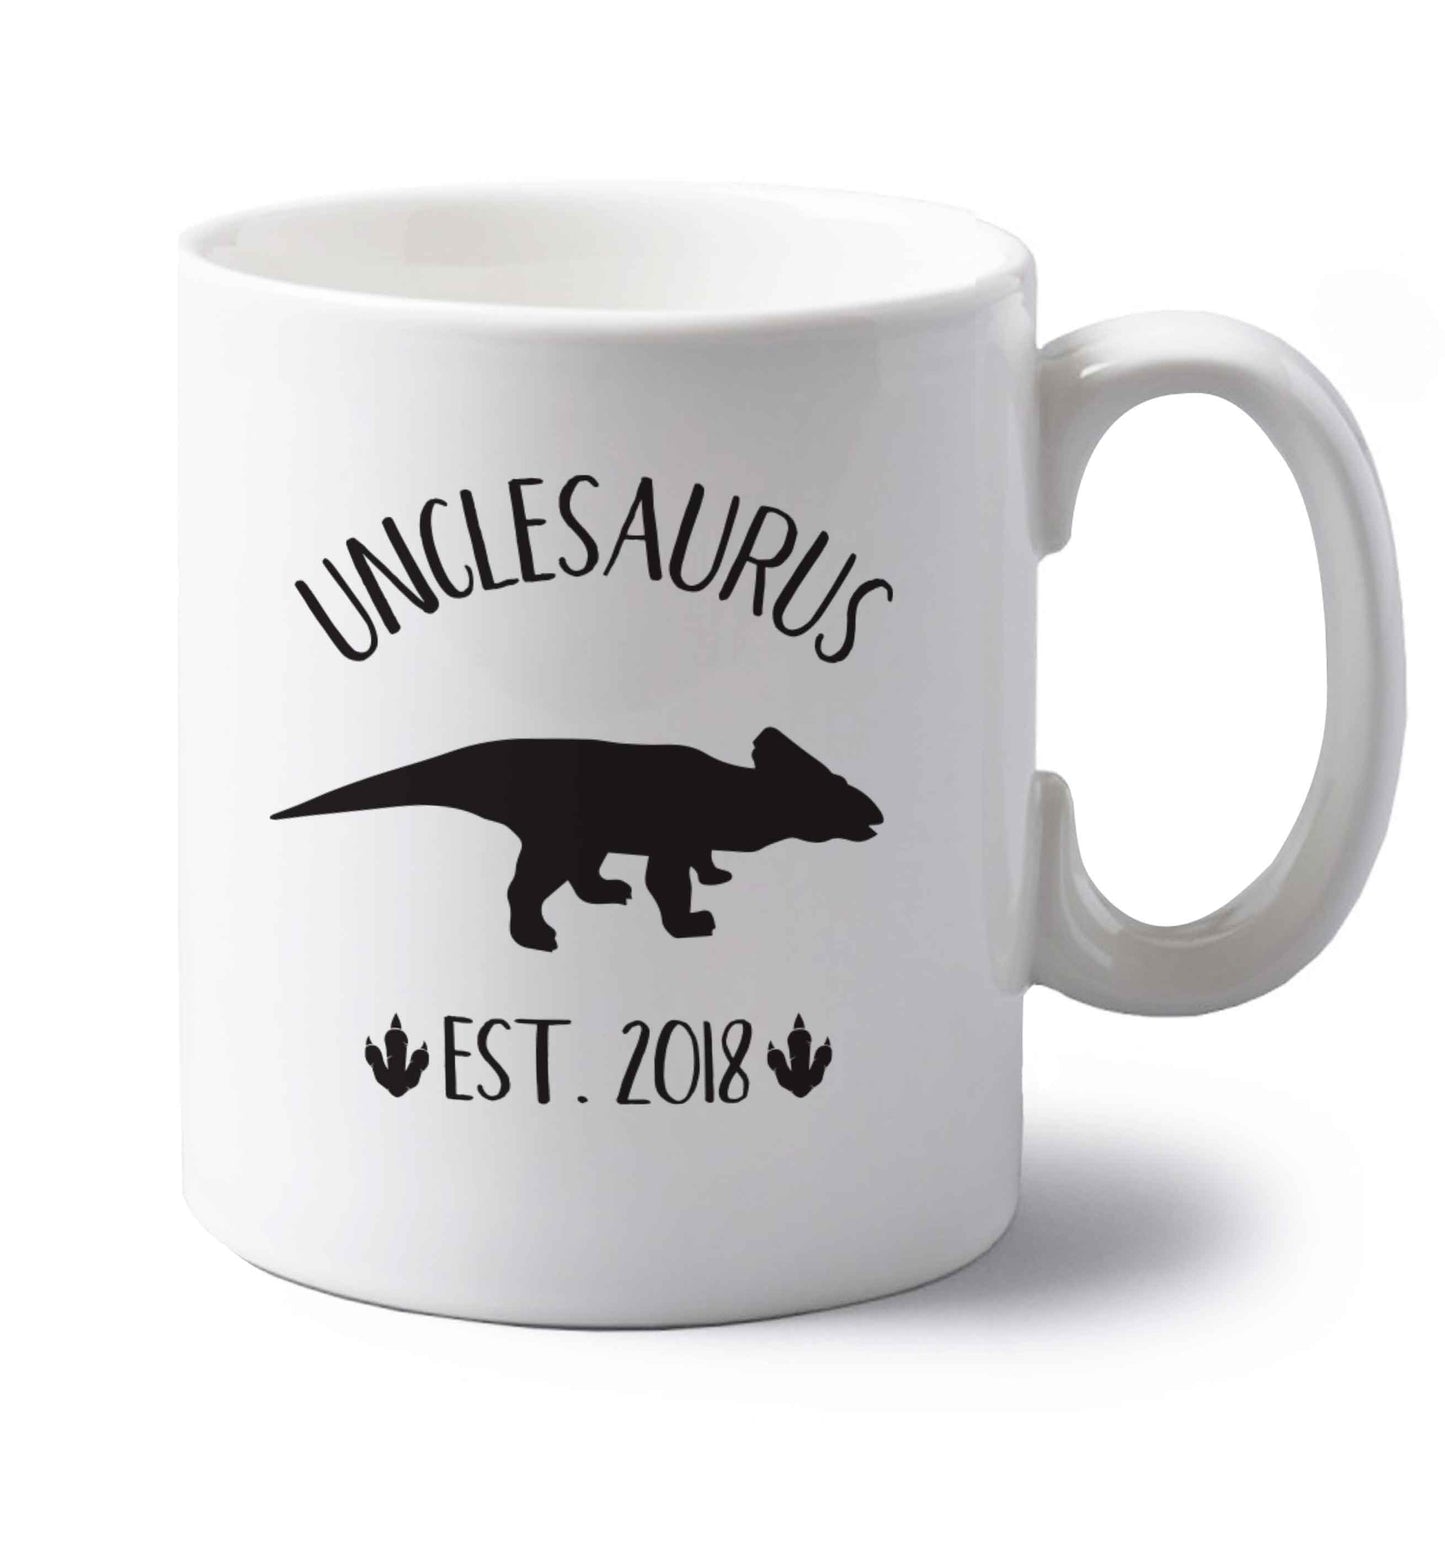 Personalised unclesaurus since (custom date) left handed white ceramic mug 